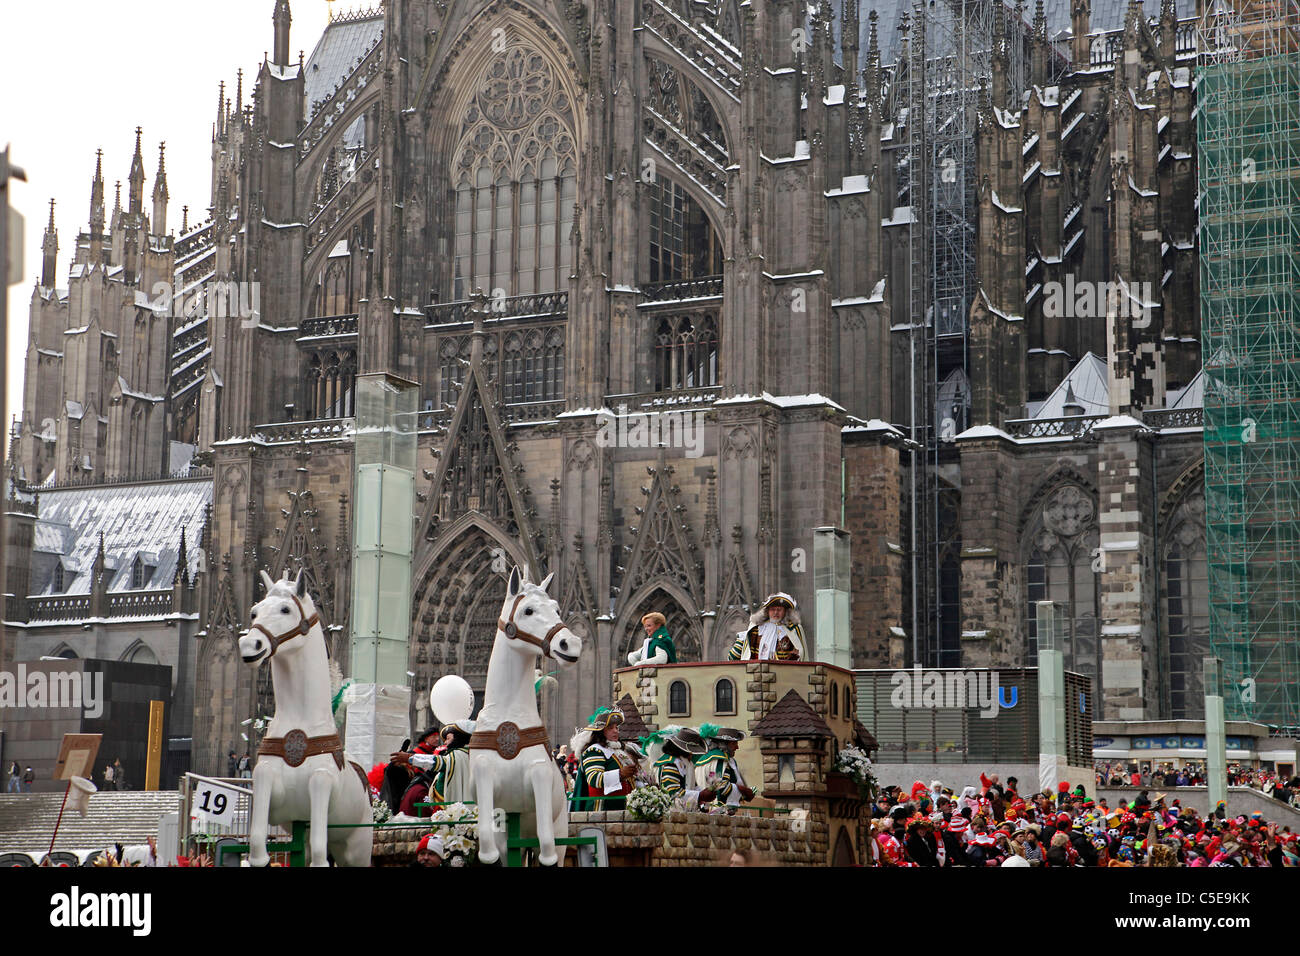 Rosenmontagszug parade, Carnival 2010 in Cologne, North Rhine-Westphalia, Germany, Europe Stock Photo